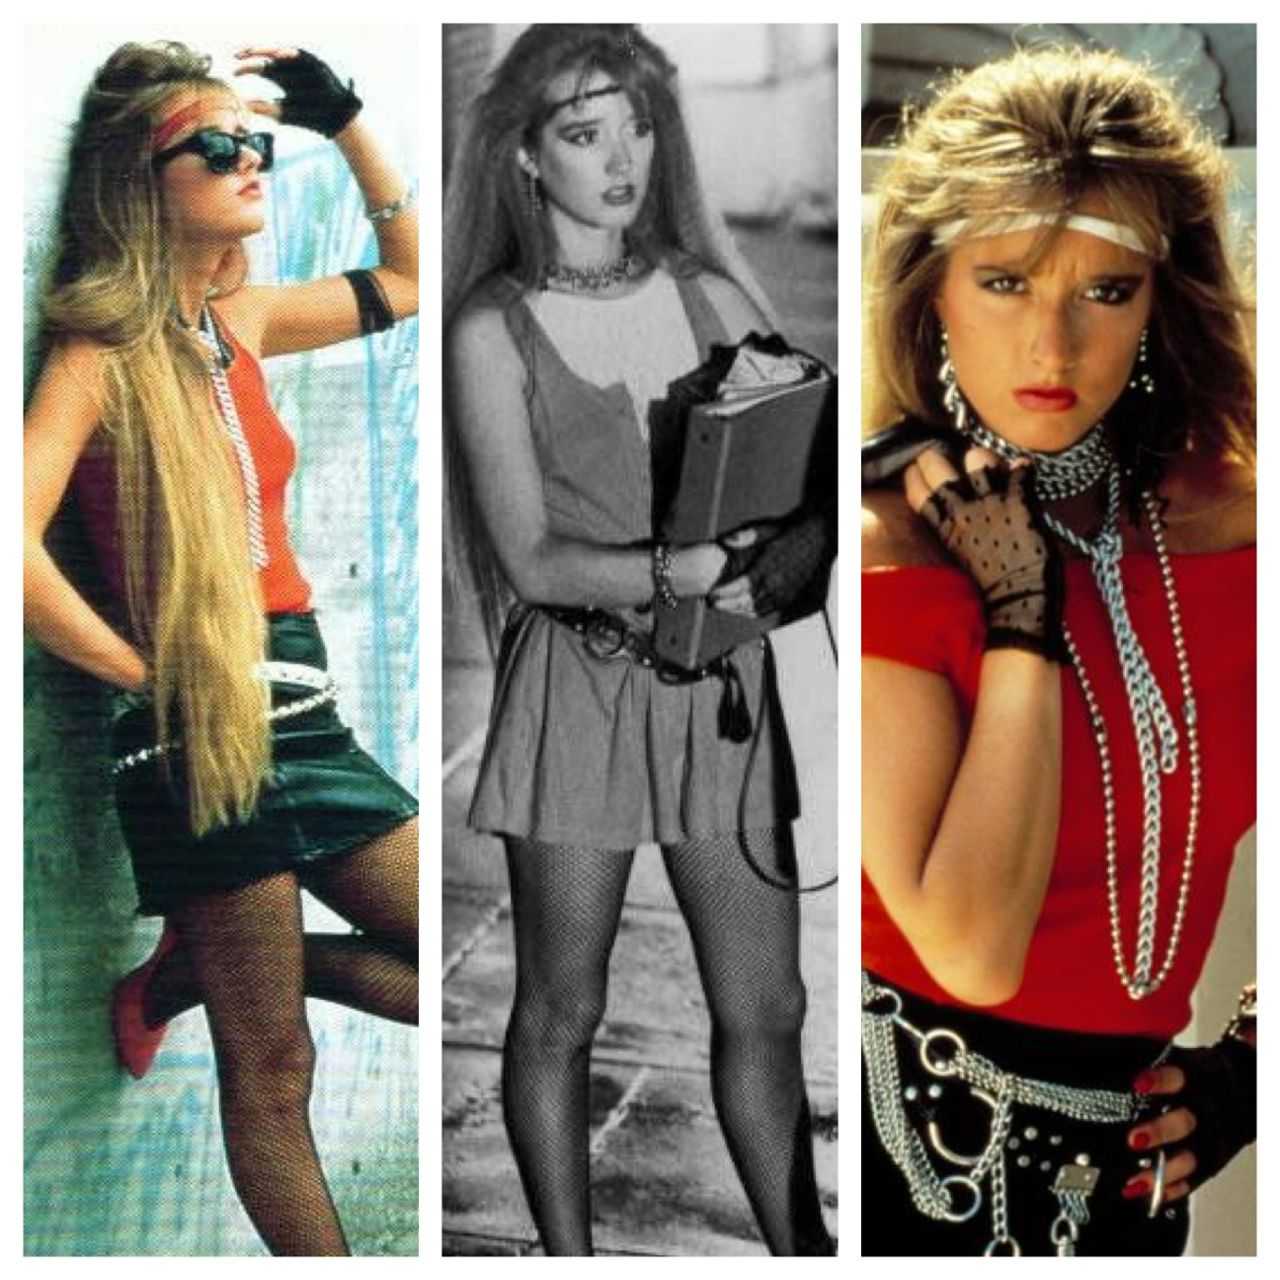 Мода 80-х: основные тренды 1980-х годов